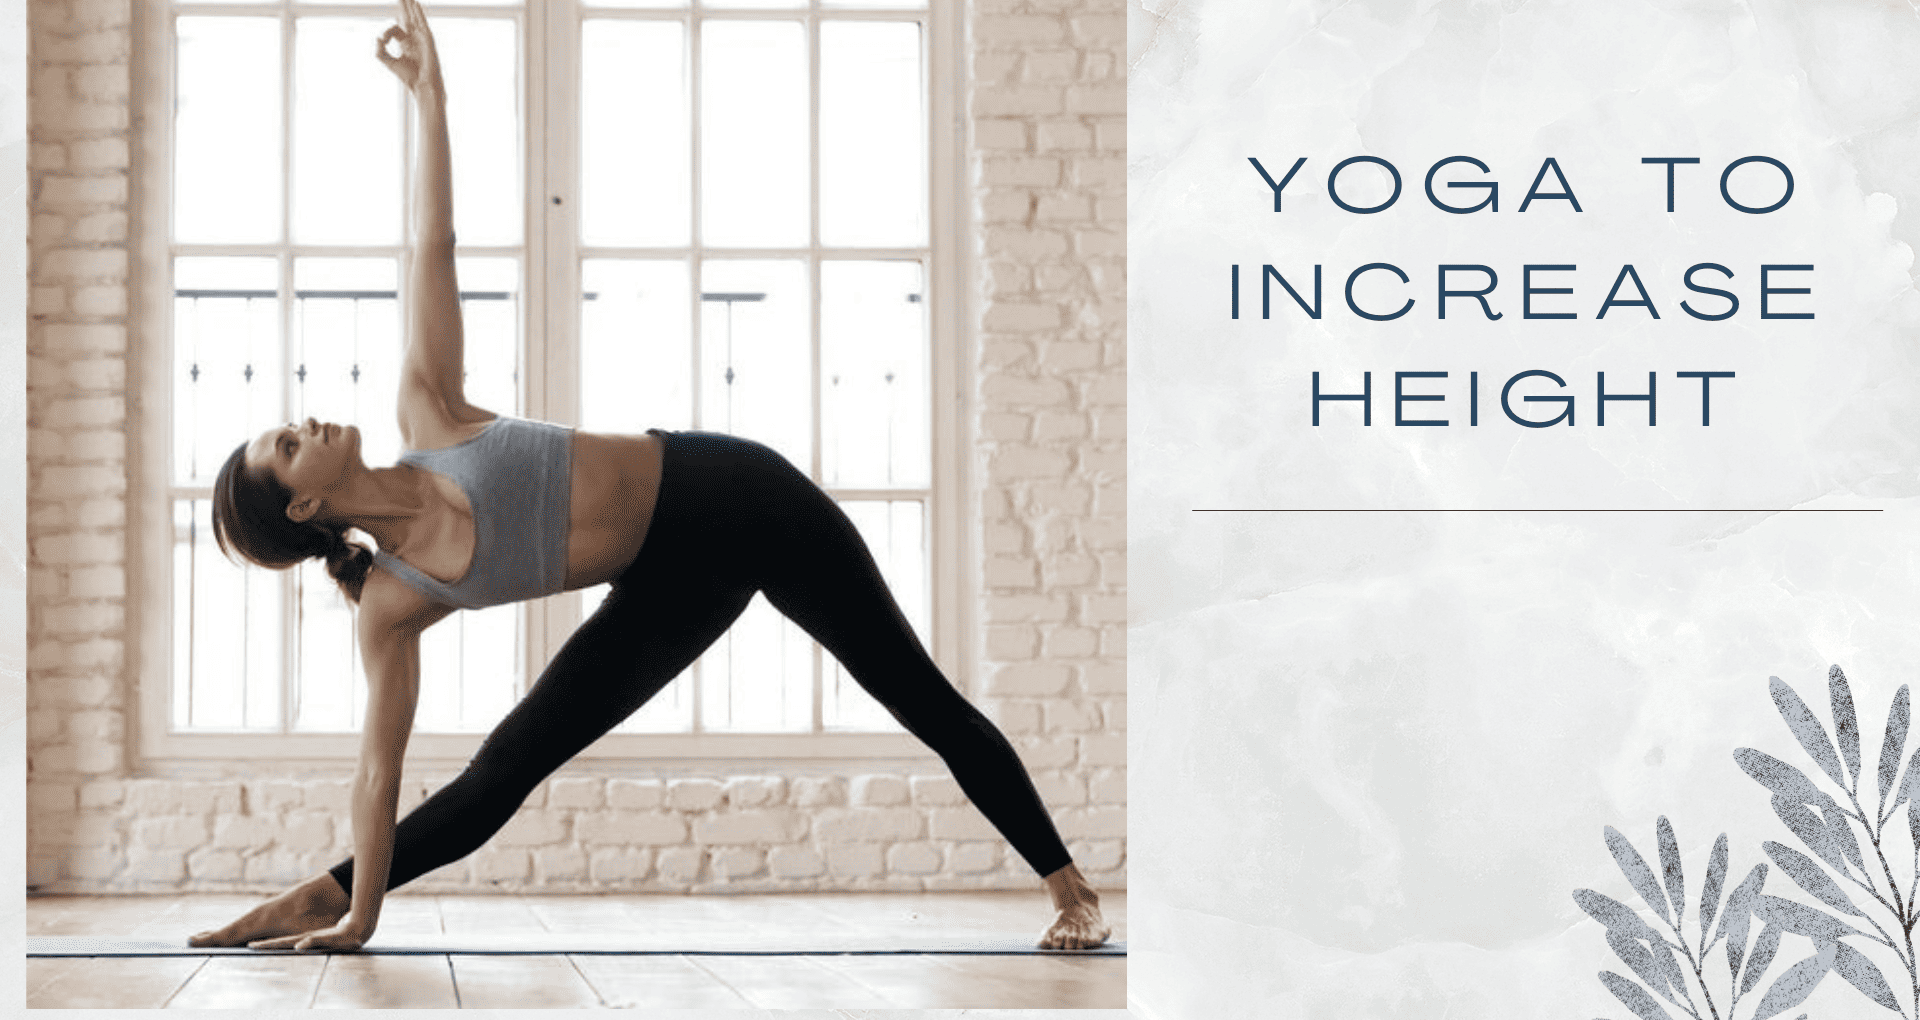 Amazon.com: QuickFit Yoga Position Exercise Poster - Yoga Asana Poses Chart  - Laminated, 18